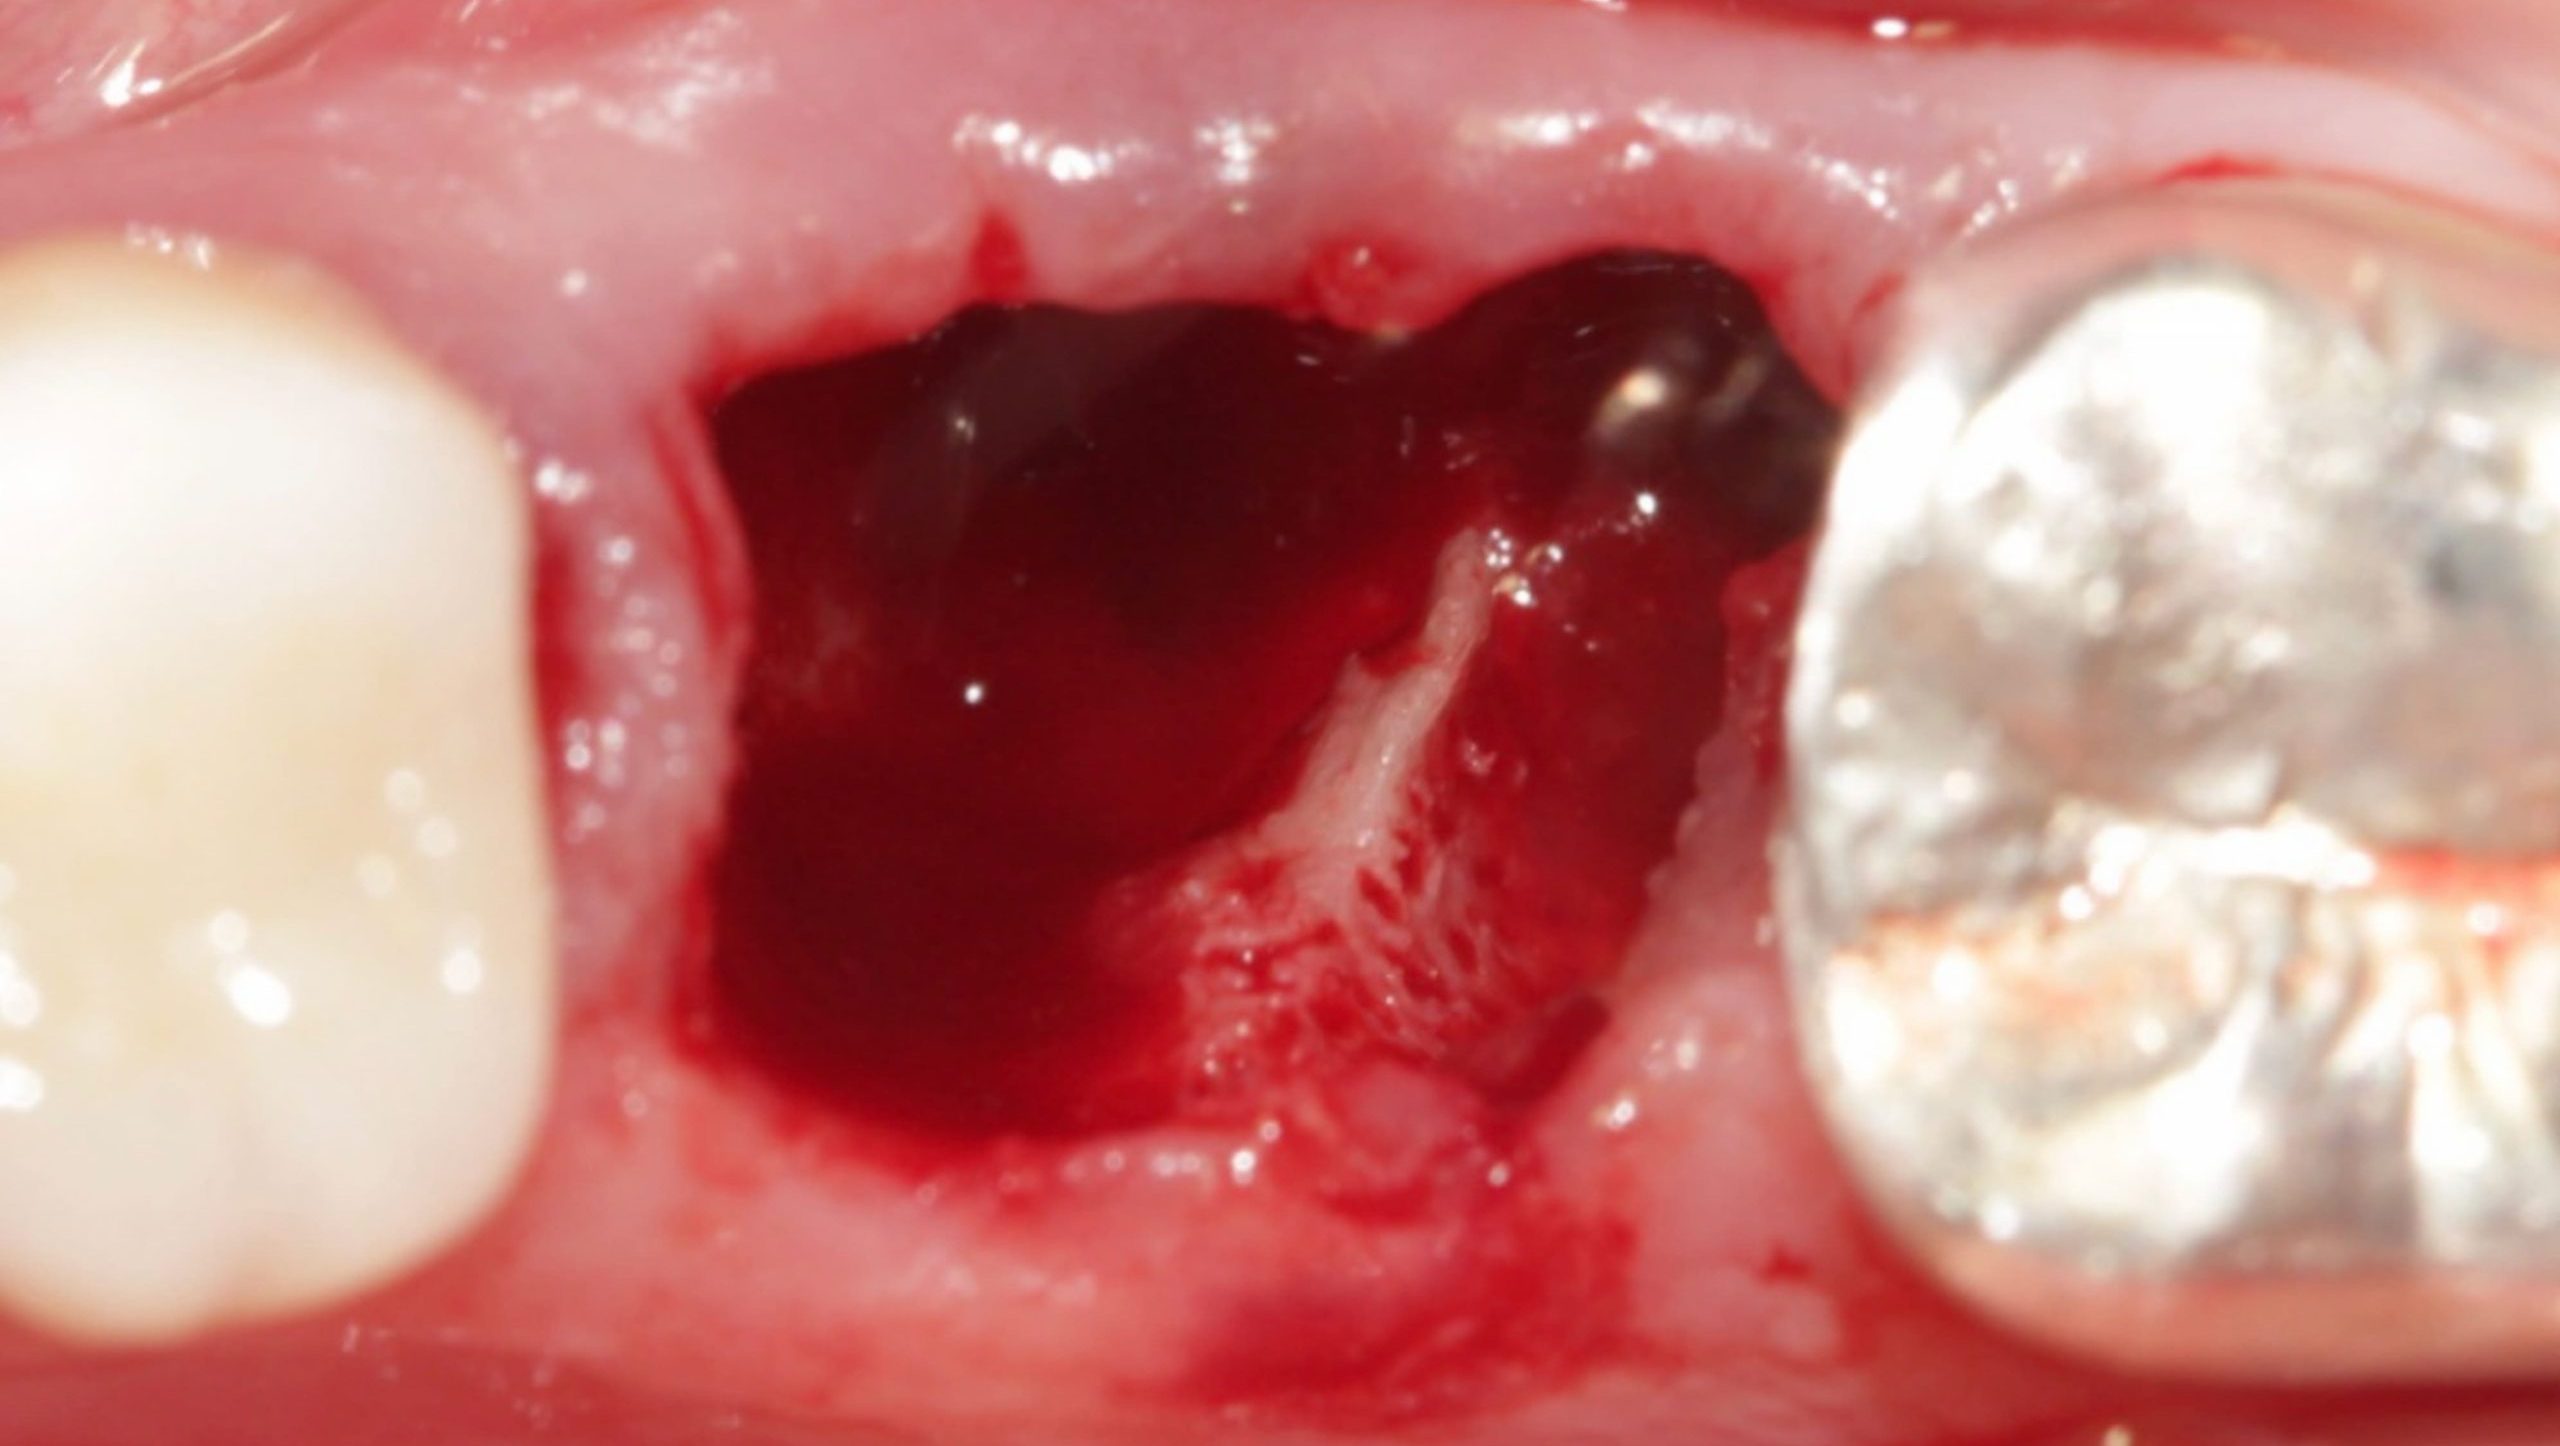 Exodontia scaled e1705603736311 - Implante Imediato Arcsys em molar inferior